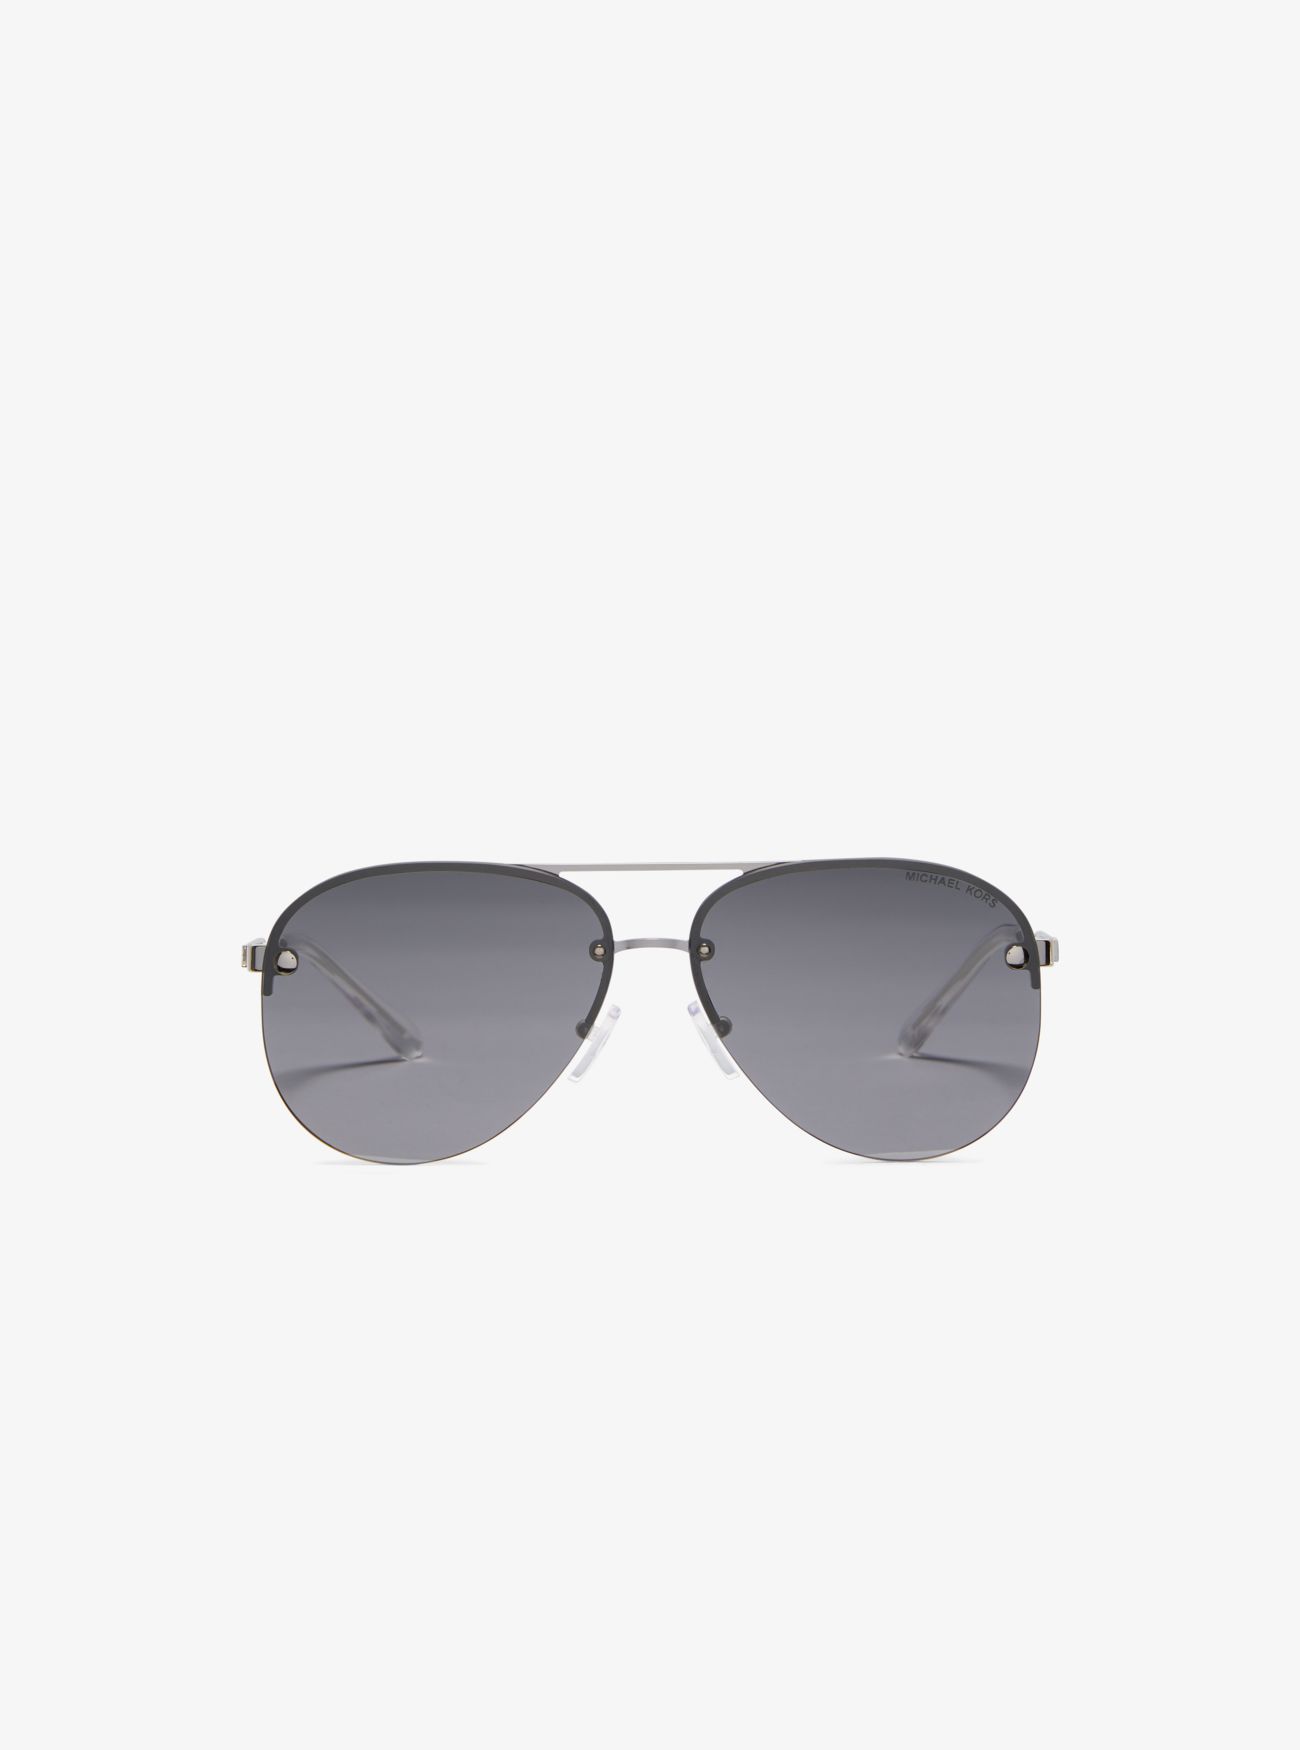 MK East Side Sunglasses - Silver - Michael Kors